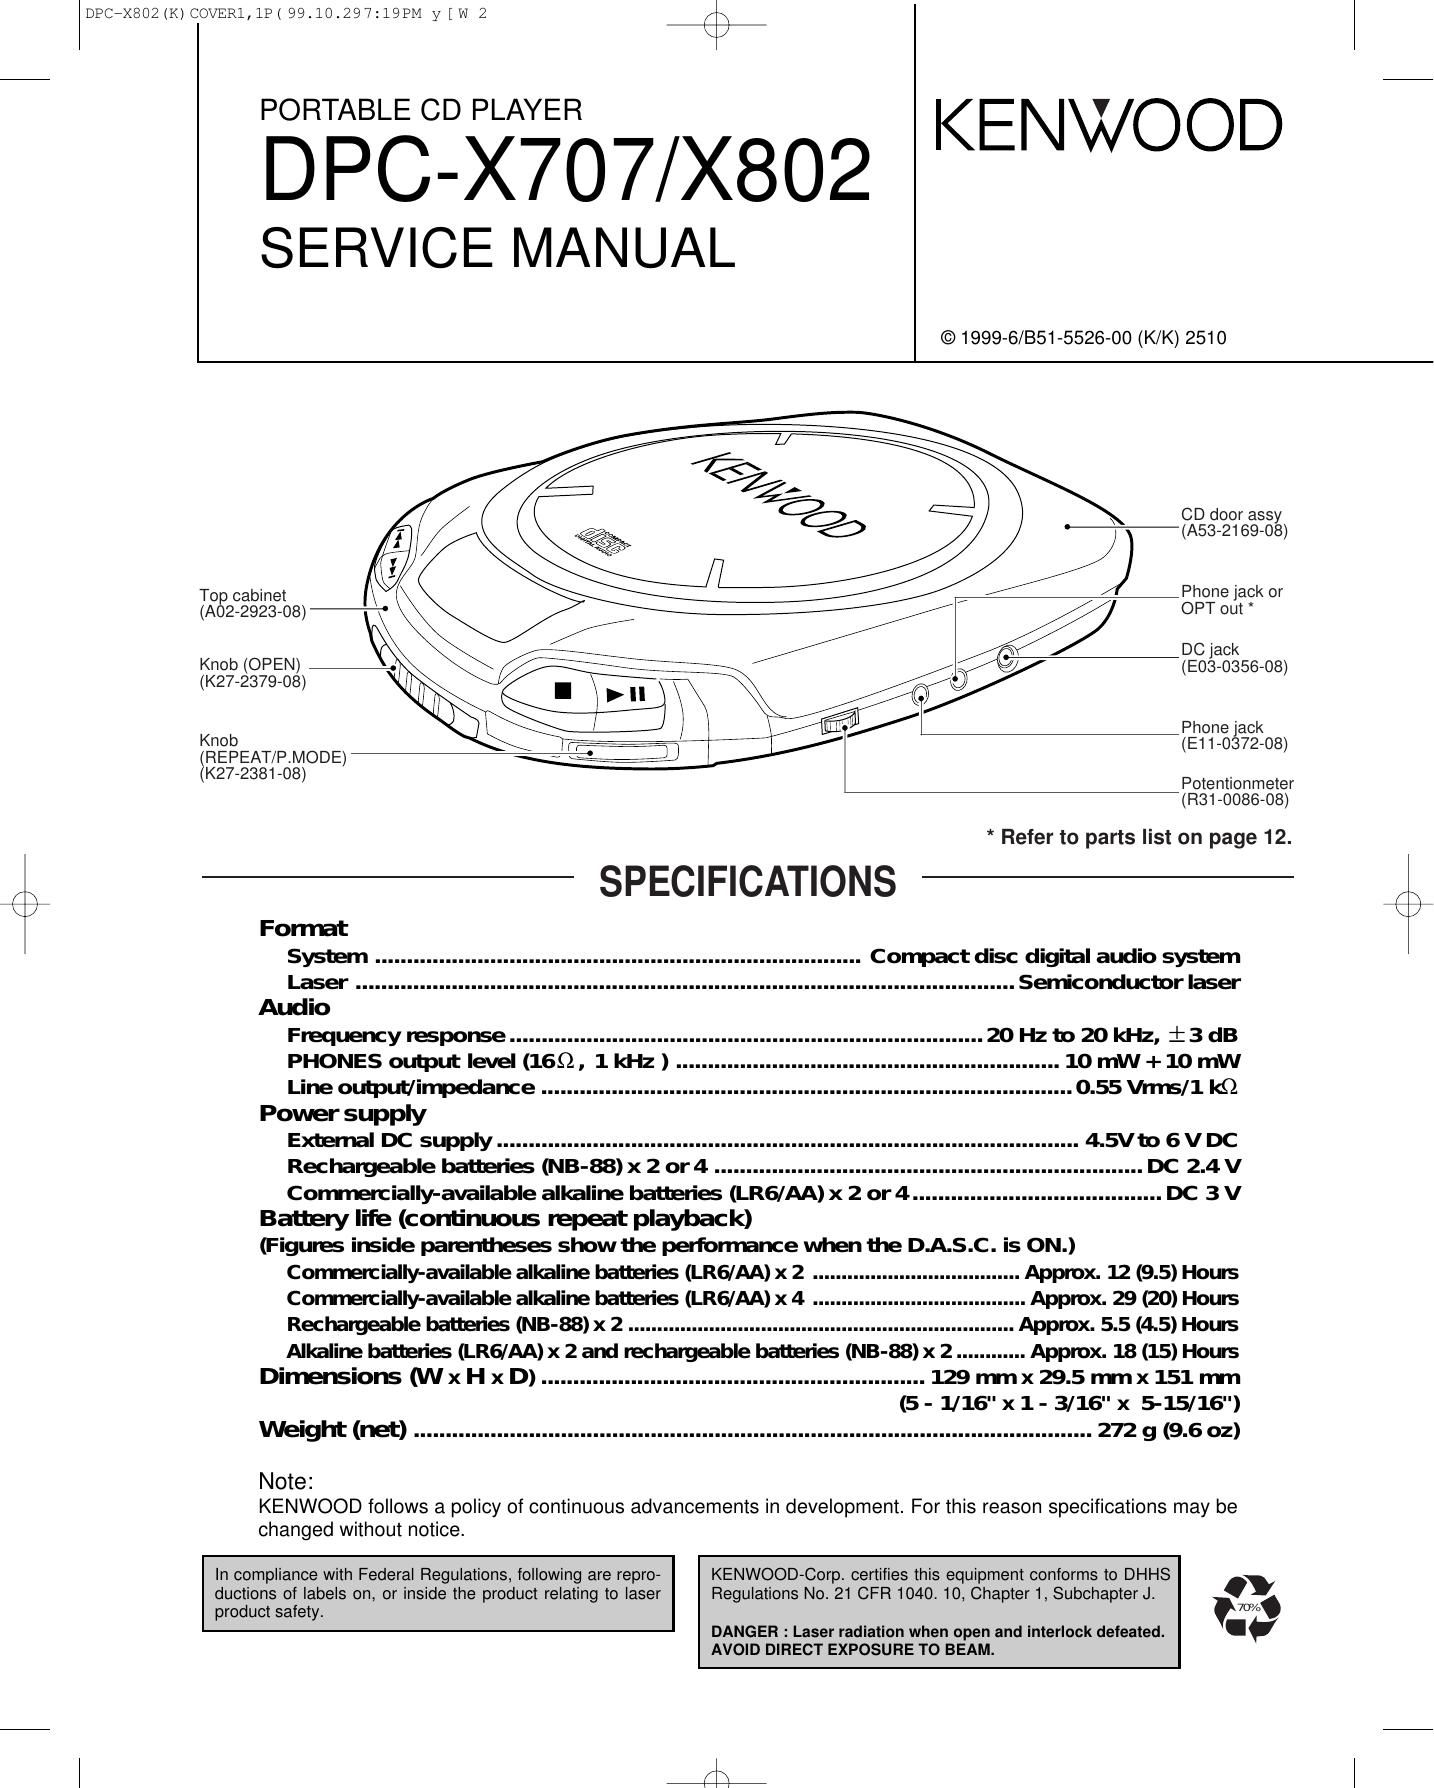 Kenwood DPCX 707 Service Manual